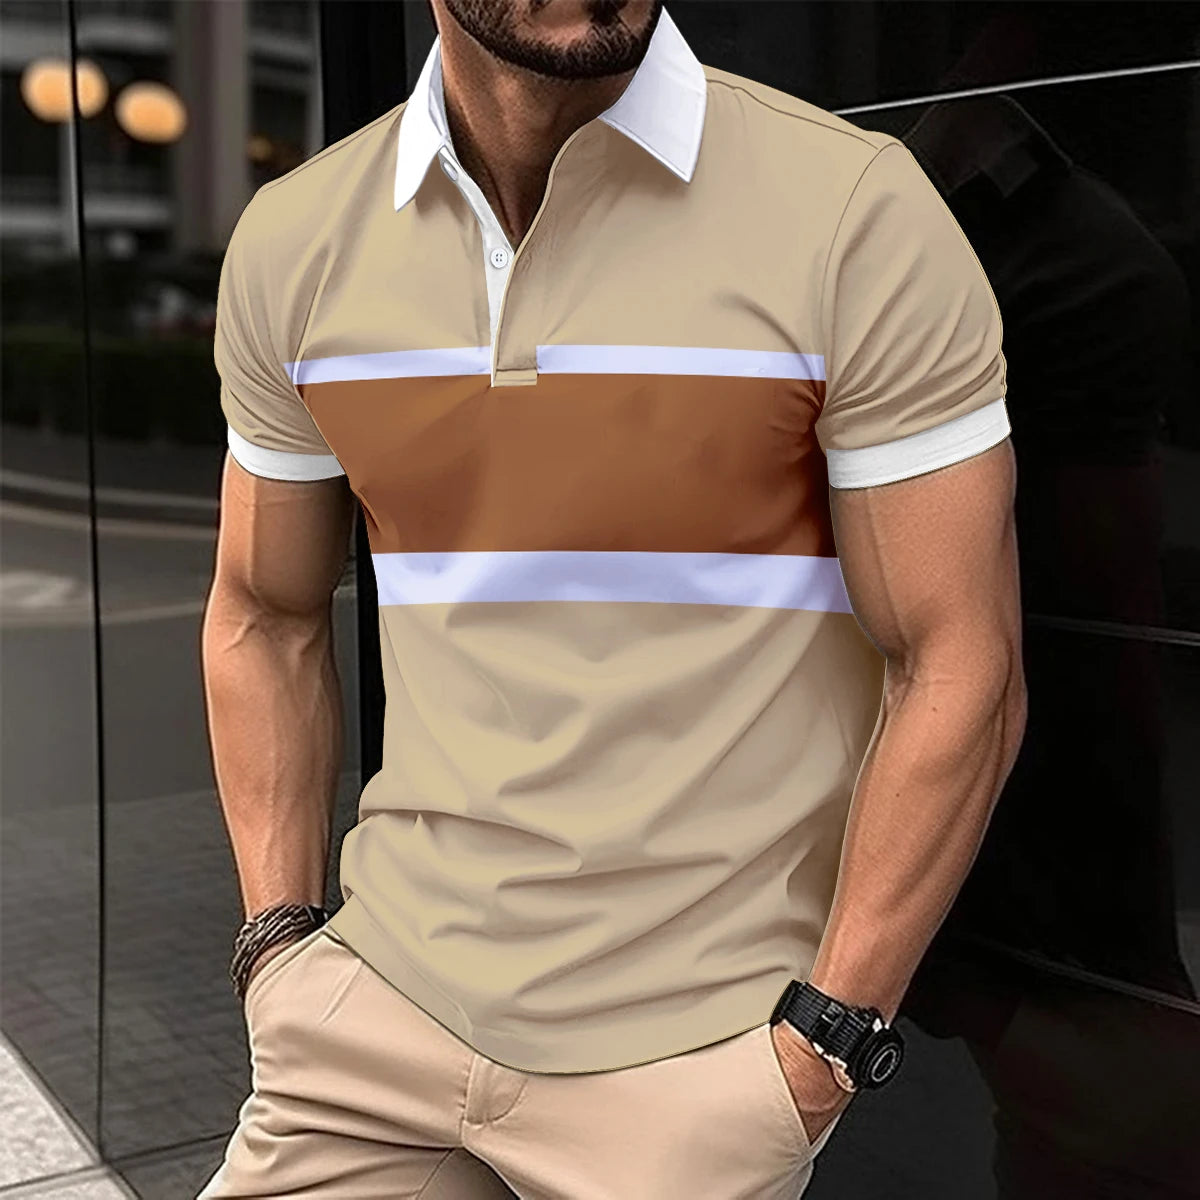 Men's Short-sleeved T-Shirt Cool Breathable POLO Shirt .